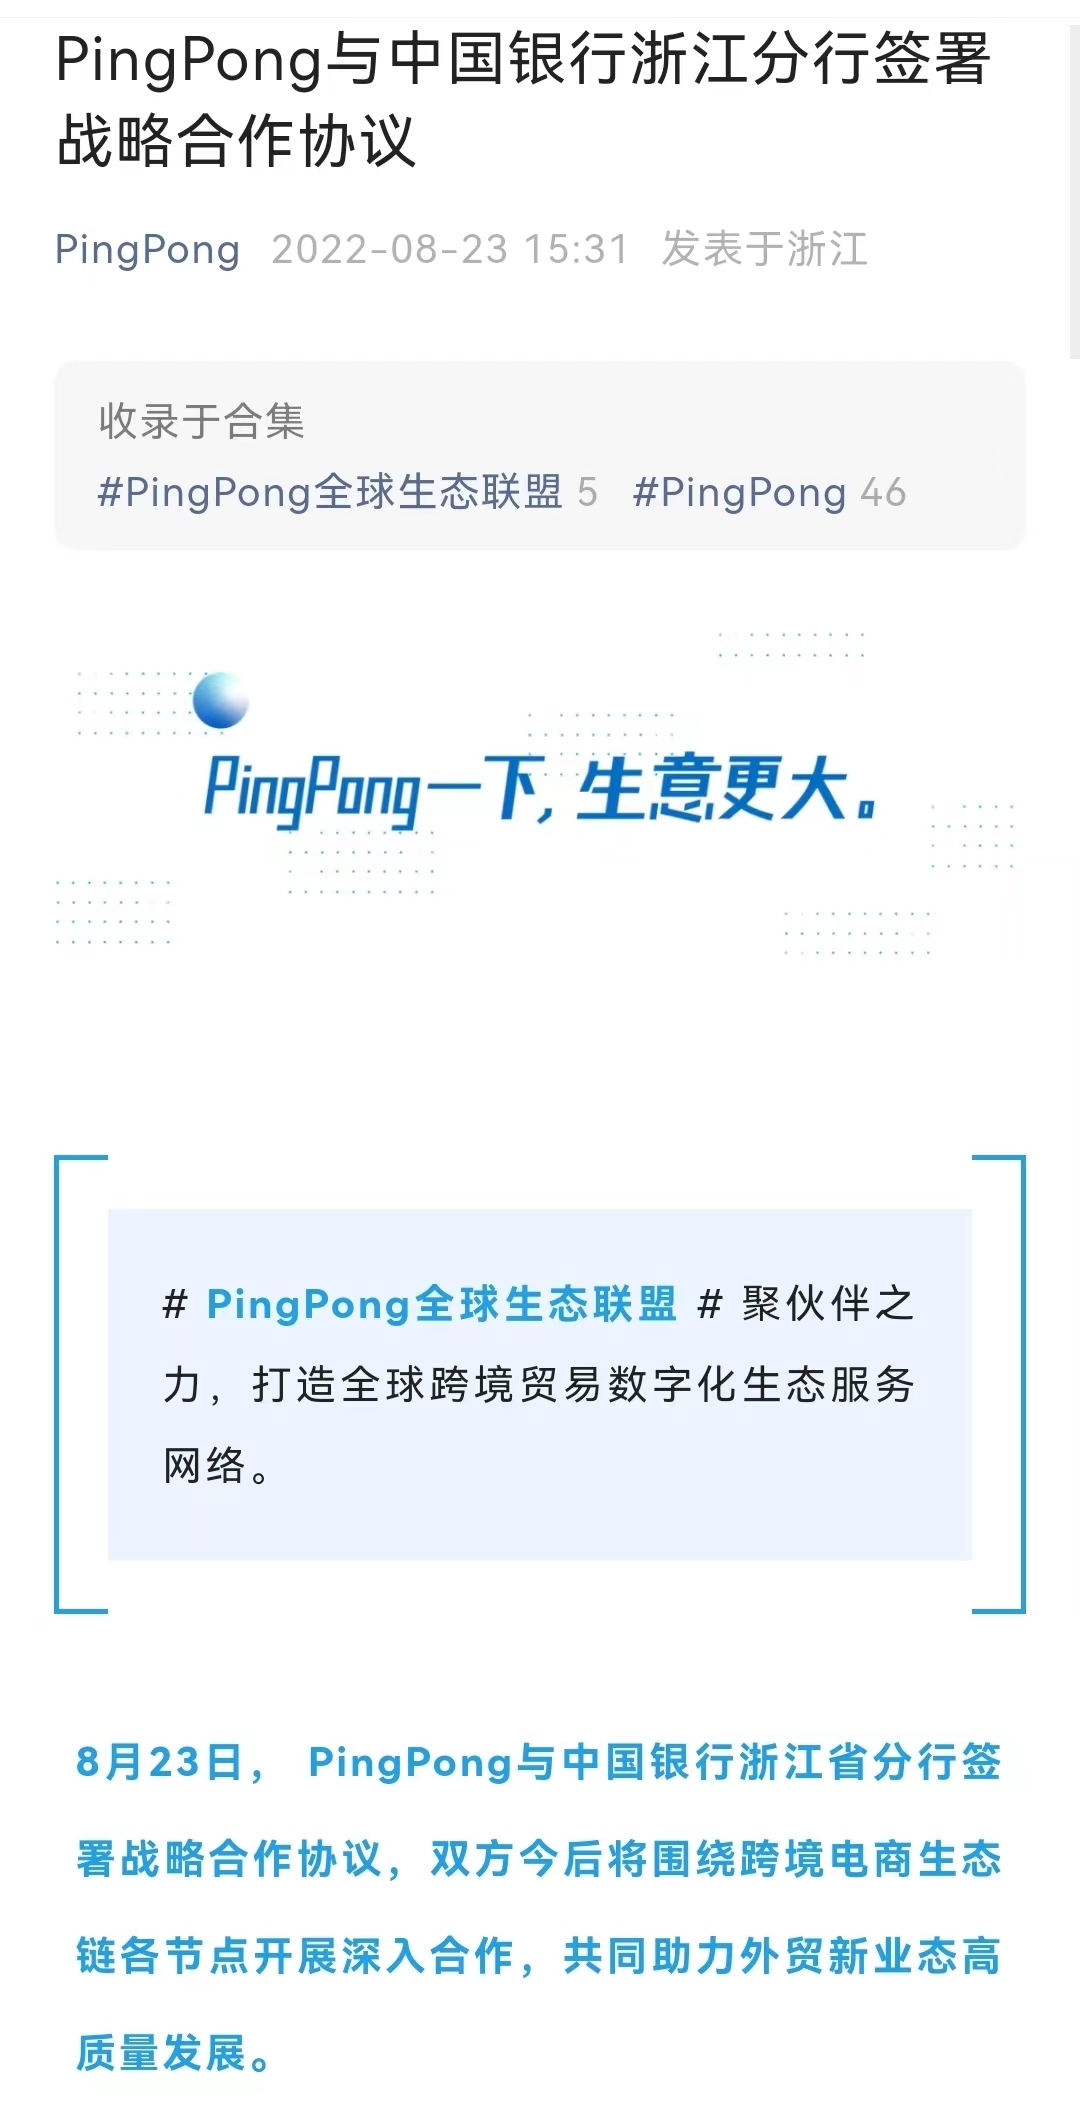 PingPong与中国银行浙江省分行签署战略合作协议